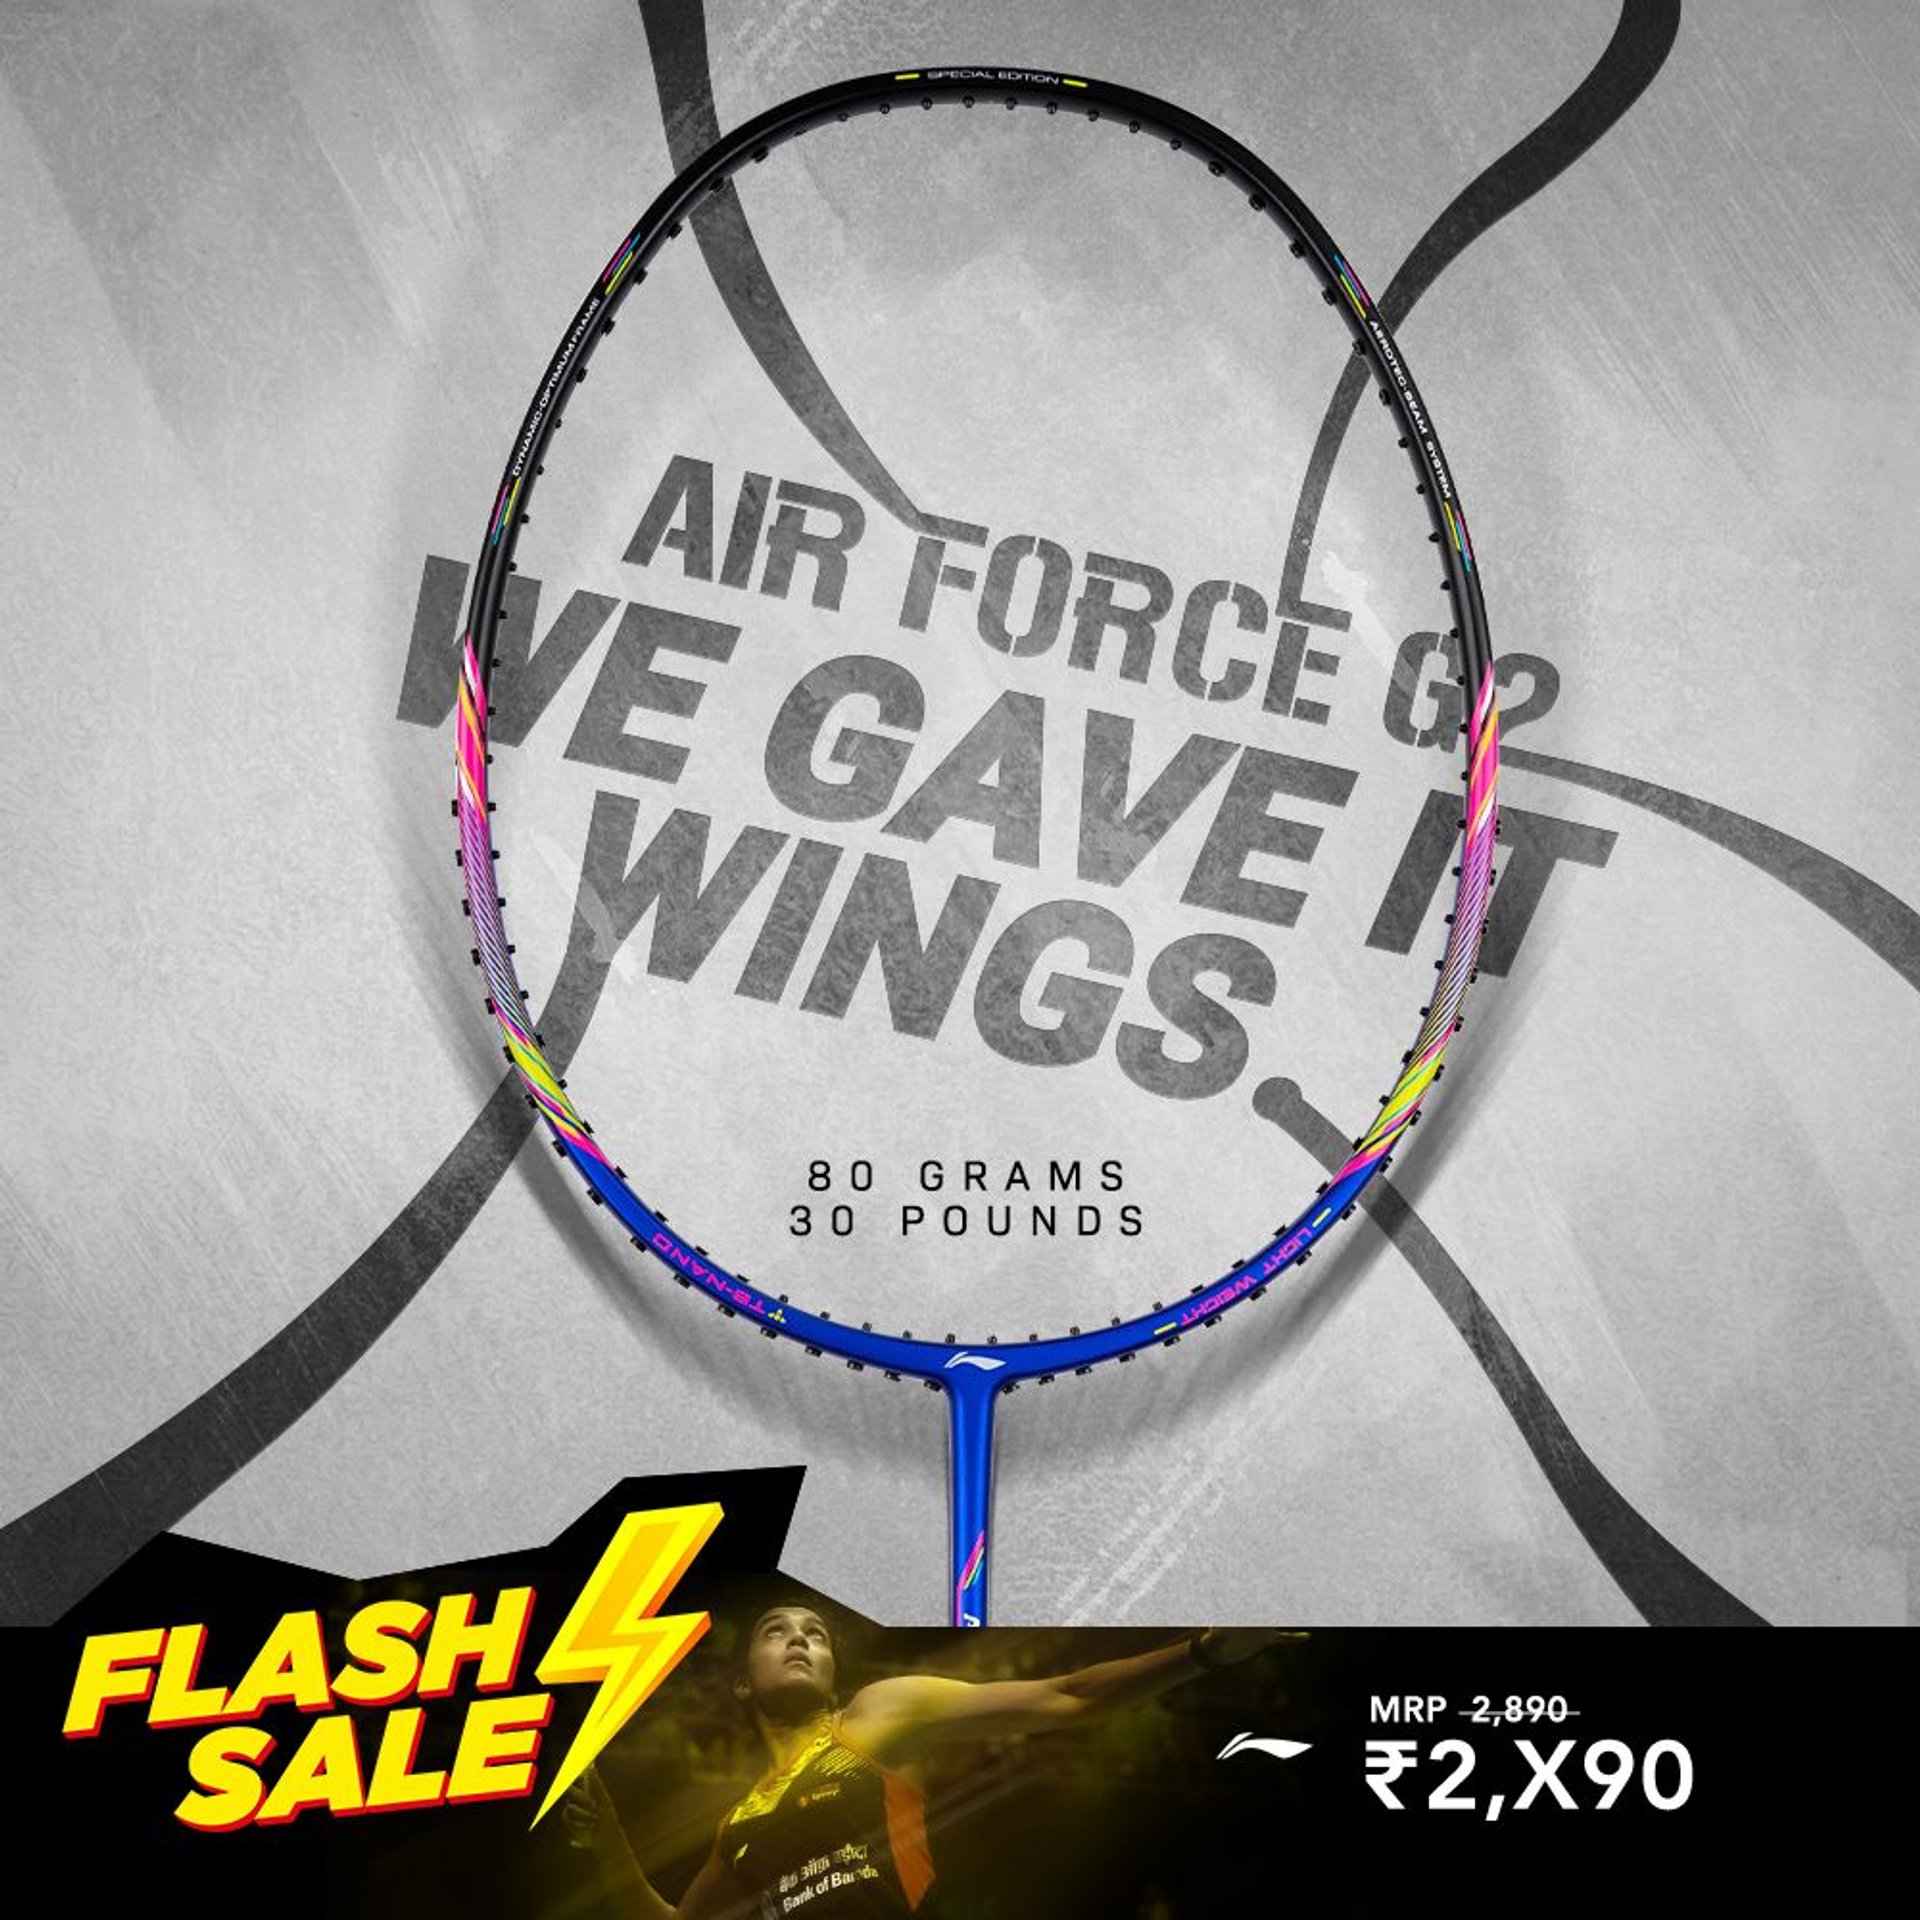 Air Force G2 - Badminton Racket